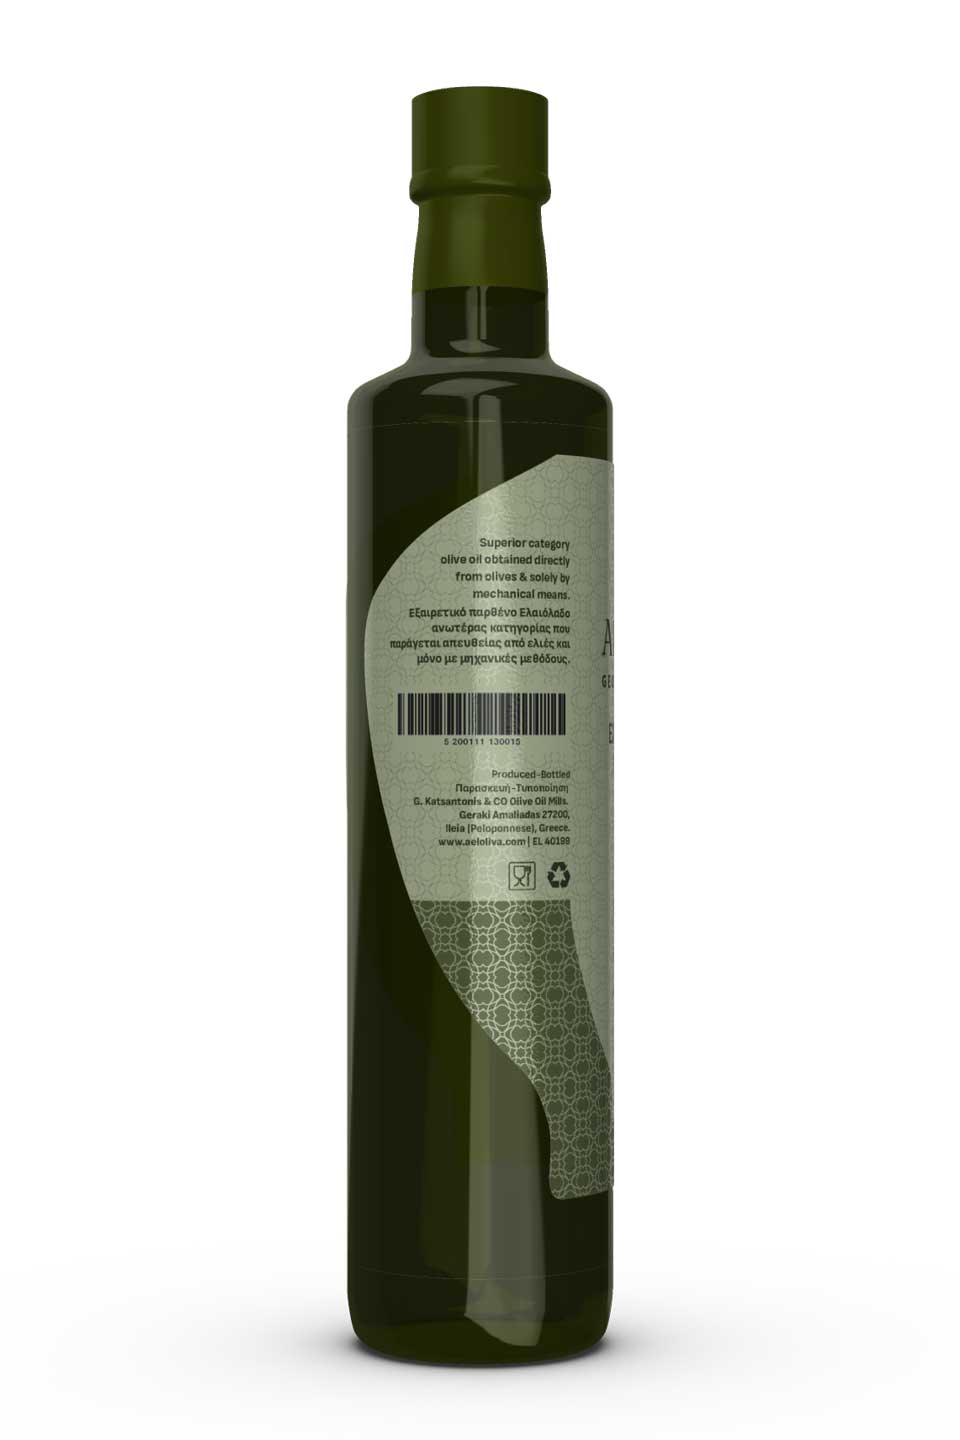 Adhesive label design for olive oil. NO IDEA. Branding Graphic Design Agency